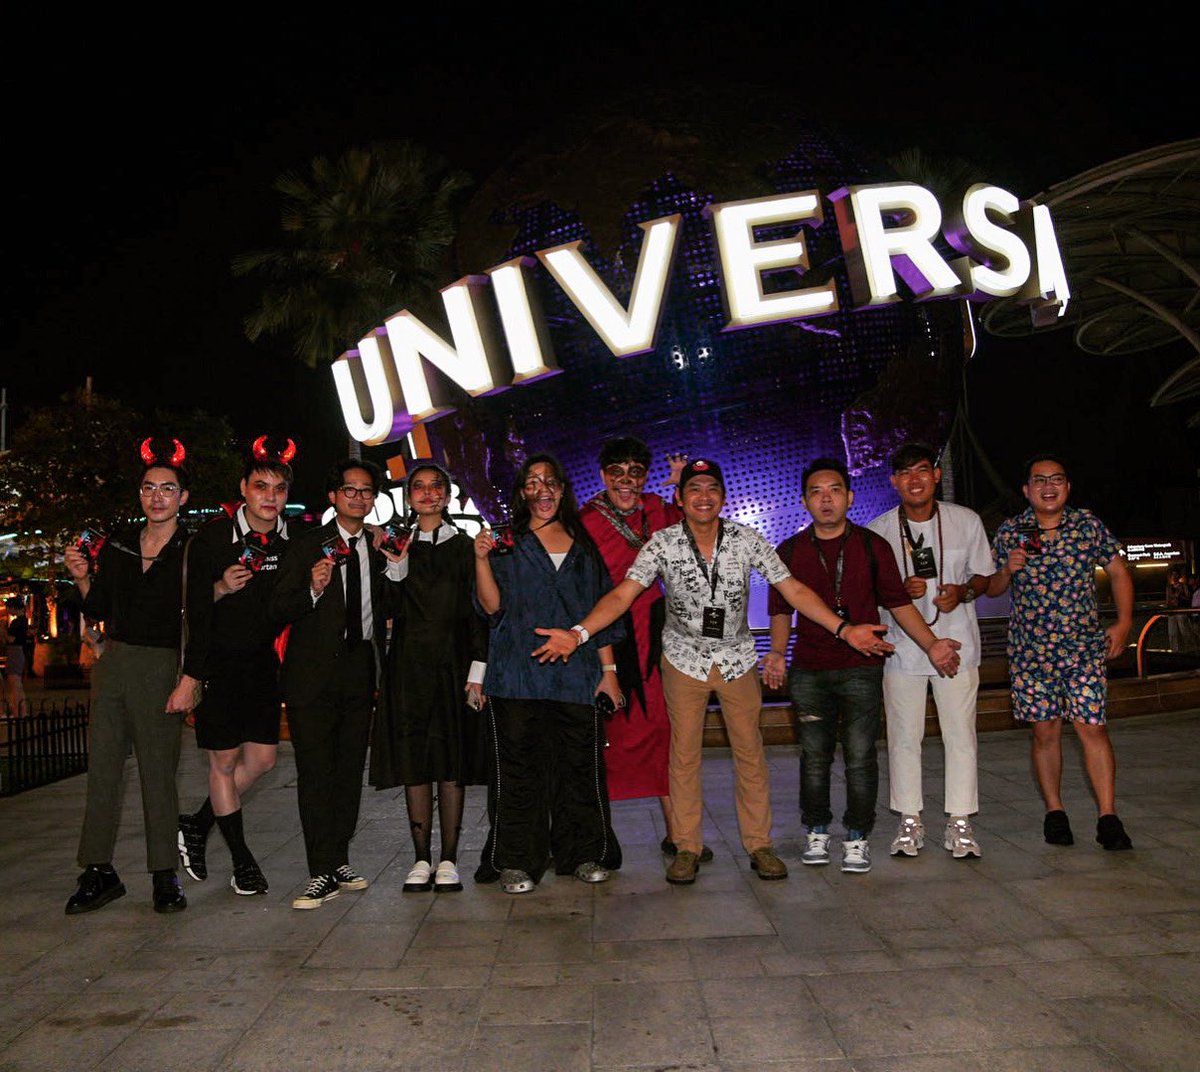 Halloween Horror Nights 11
เหล่าบรรดา Influencer ตัวแทนประเทศไทย อาสาไปวิ่งหนีผีในงาน Halloween Horror Nights 11
ที่ Universal Studios Singapore , Resort World Sentosa

#rwsmoments
#hhn11
#seaaquarium
#universalstudiossingapore
#TheGhostRadioRWSHHN11